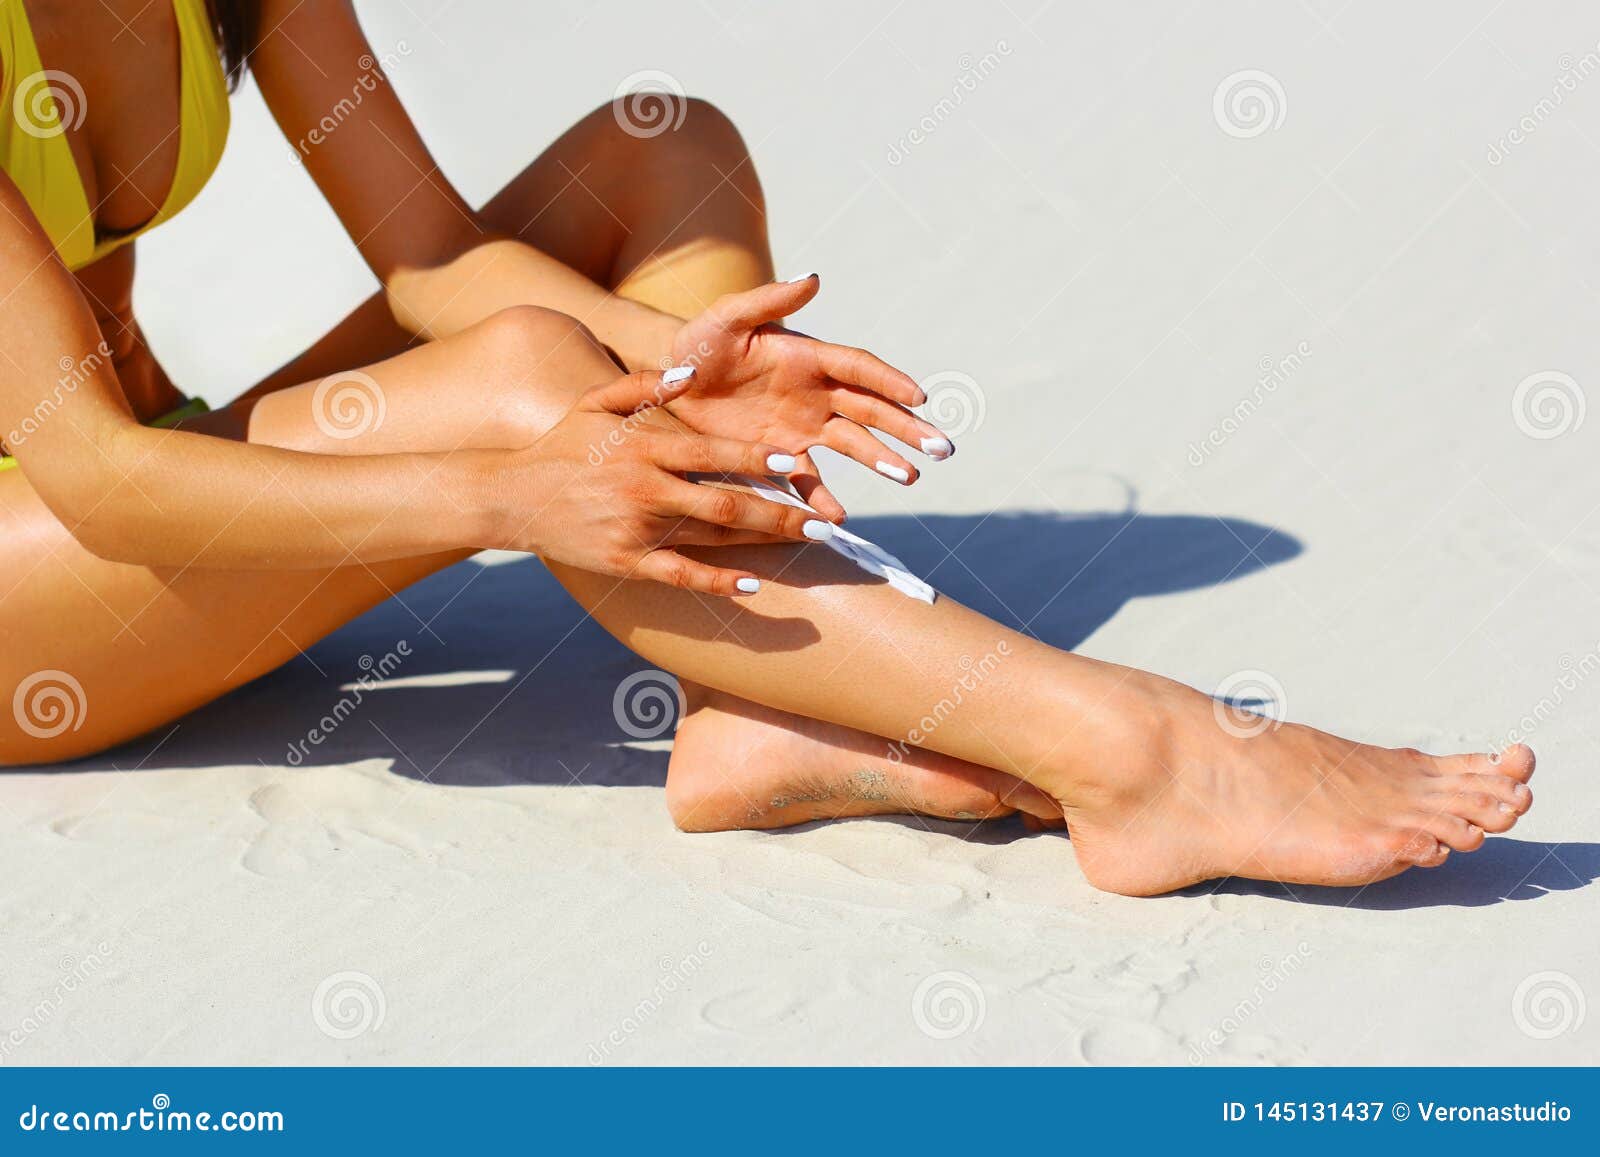 woman`s beautiful legs on the beach. tan woman applying sunscreen on legs. close-up